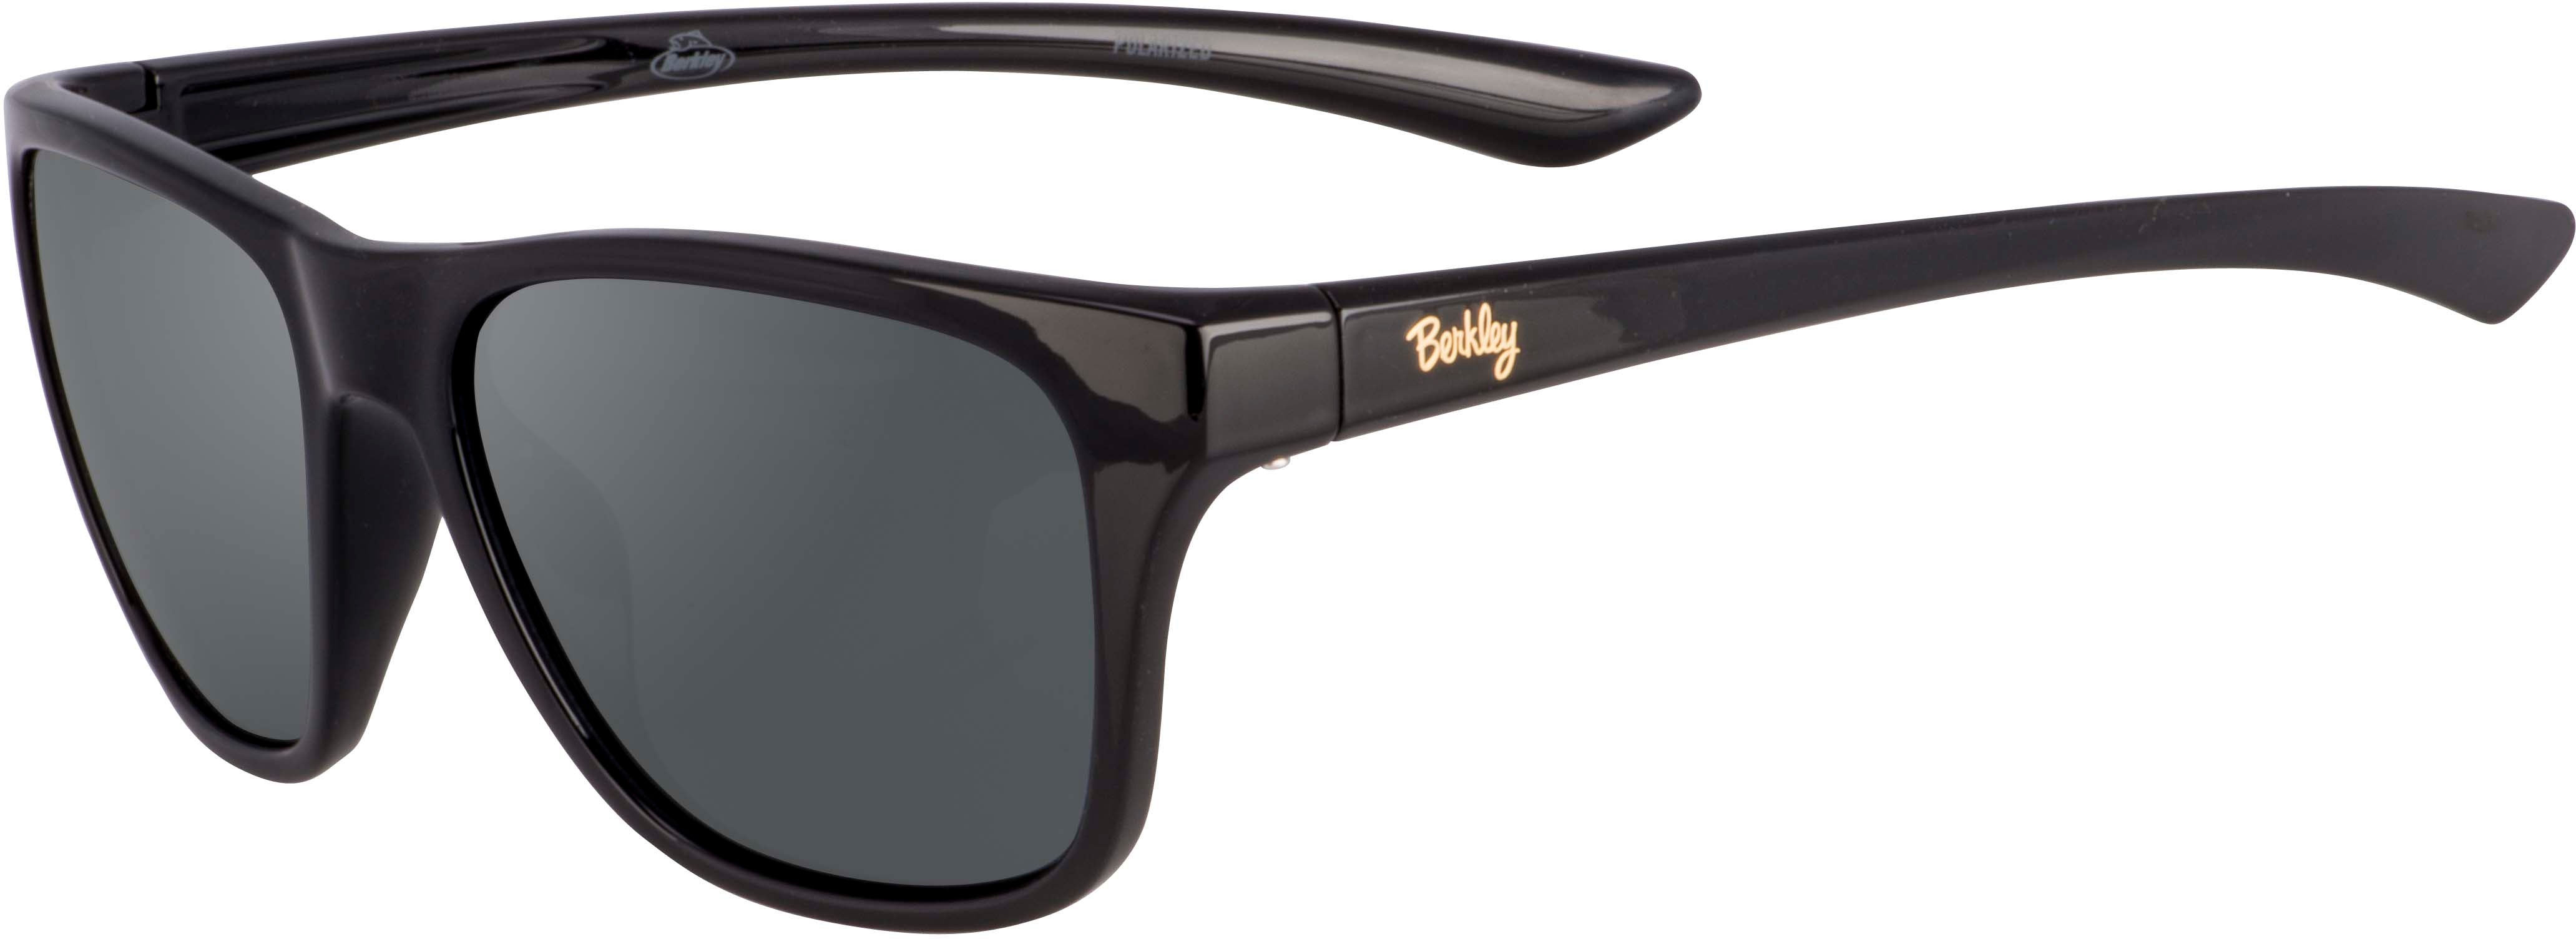 Berkley BER005 Sunglasses — Discount Tackle